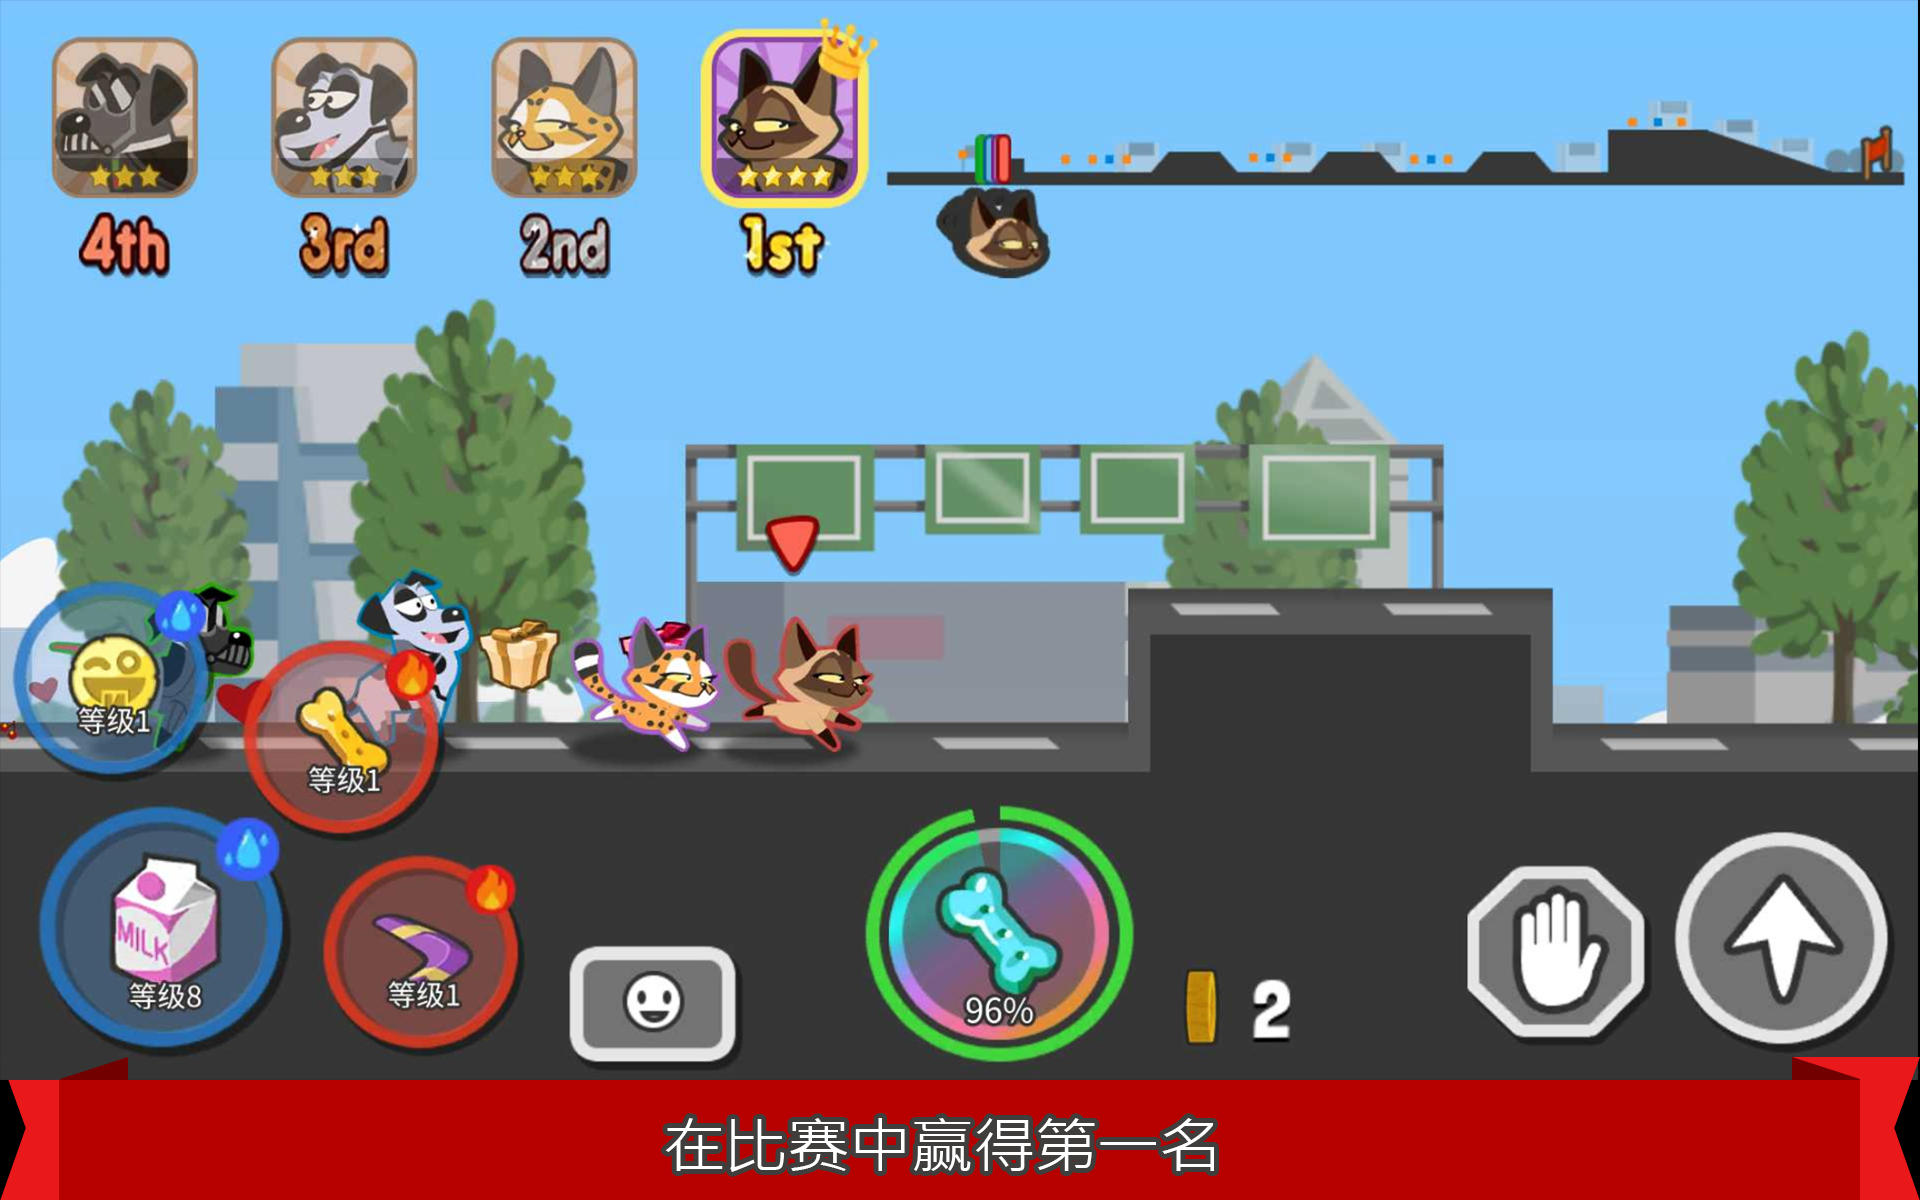 Screenshot 1 of Pets Race - Lustiges Multiplayer-PvP-Online-Rennspiel 1.2.9